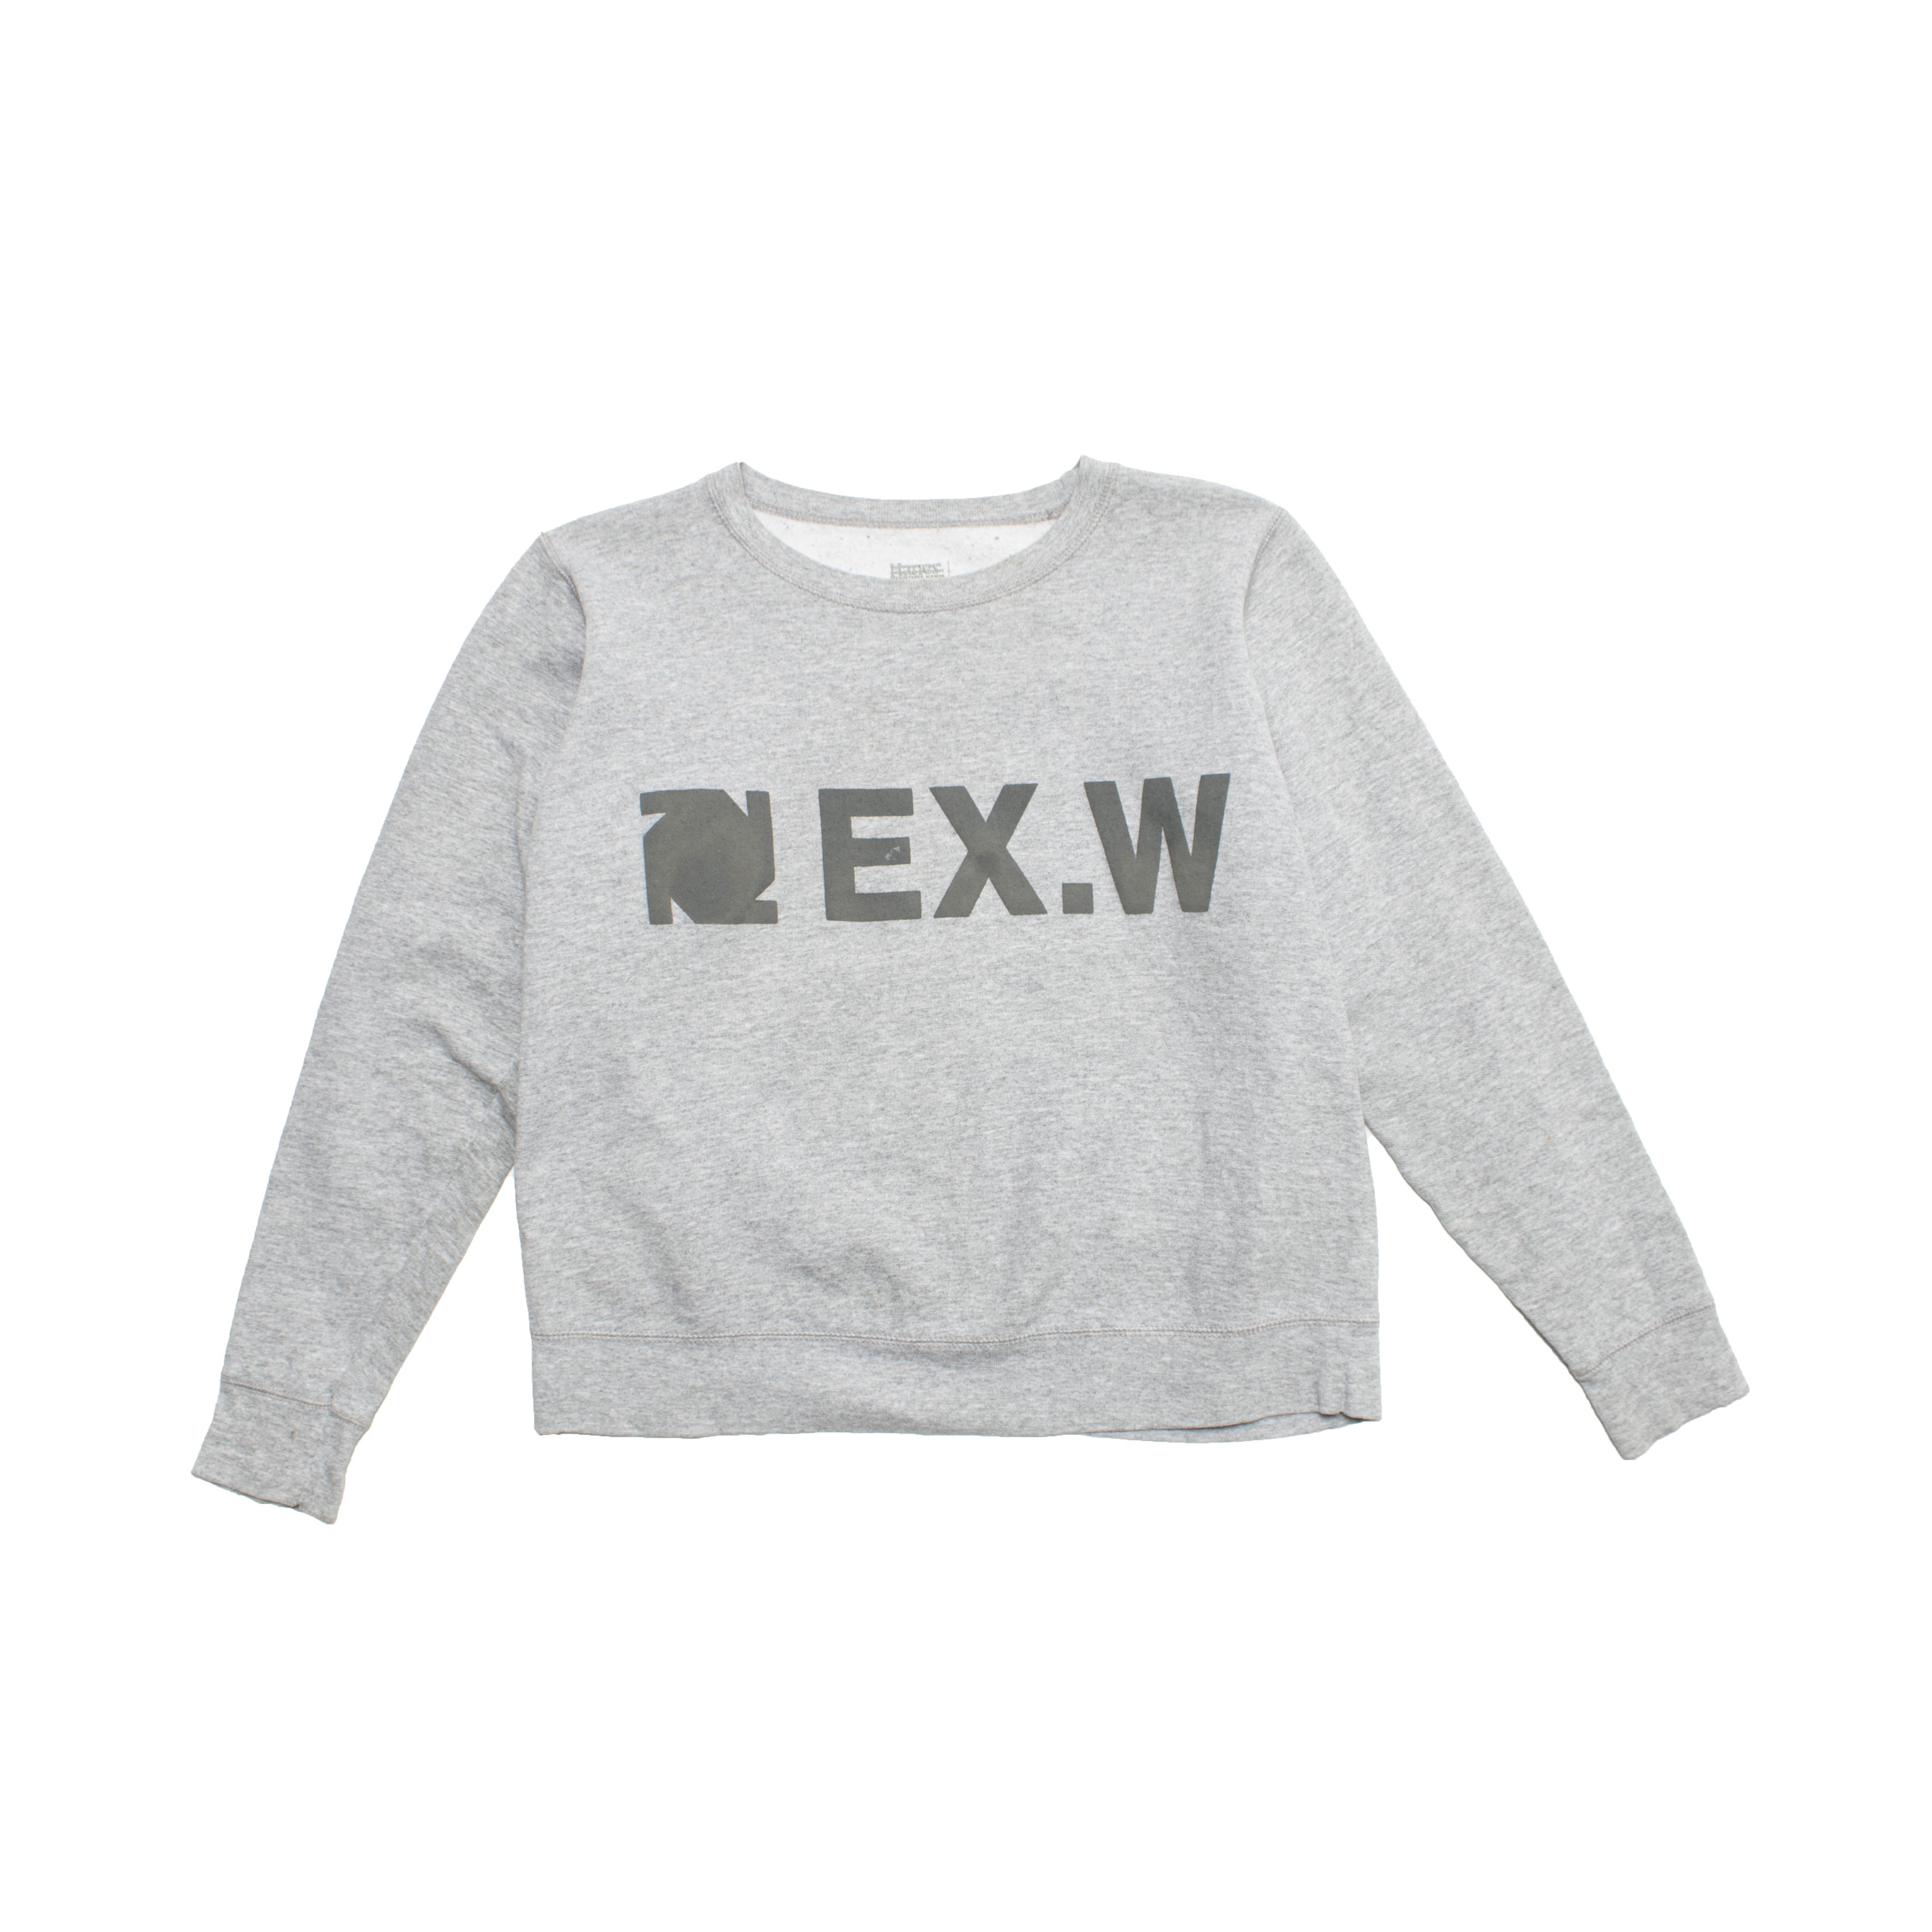 EXW - Ex Works Grey Printed Jumper x 1